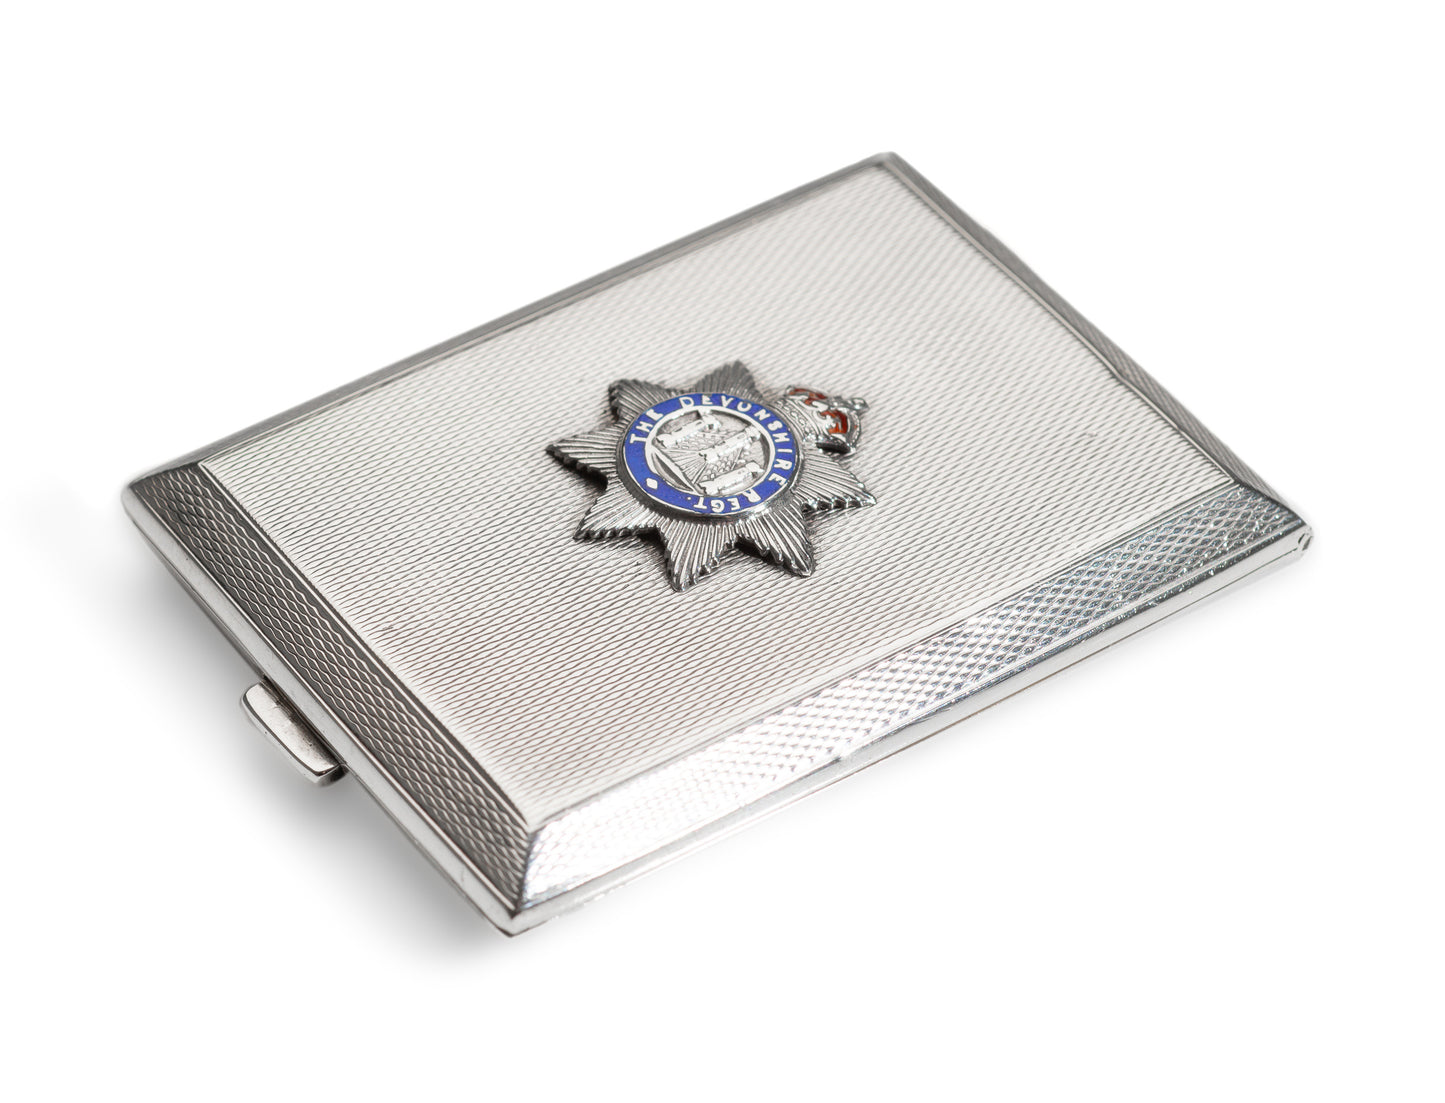 Art Deco Devonshire Regiment Silver & Enamel Match Book Vesta Case with Insignia (Code 1244)